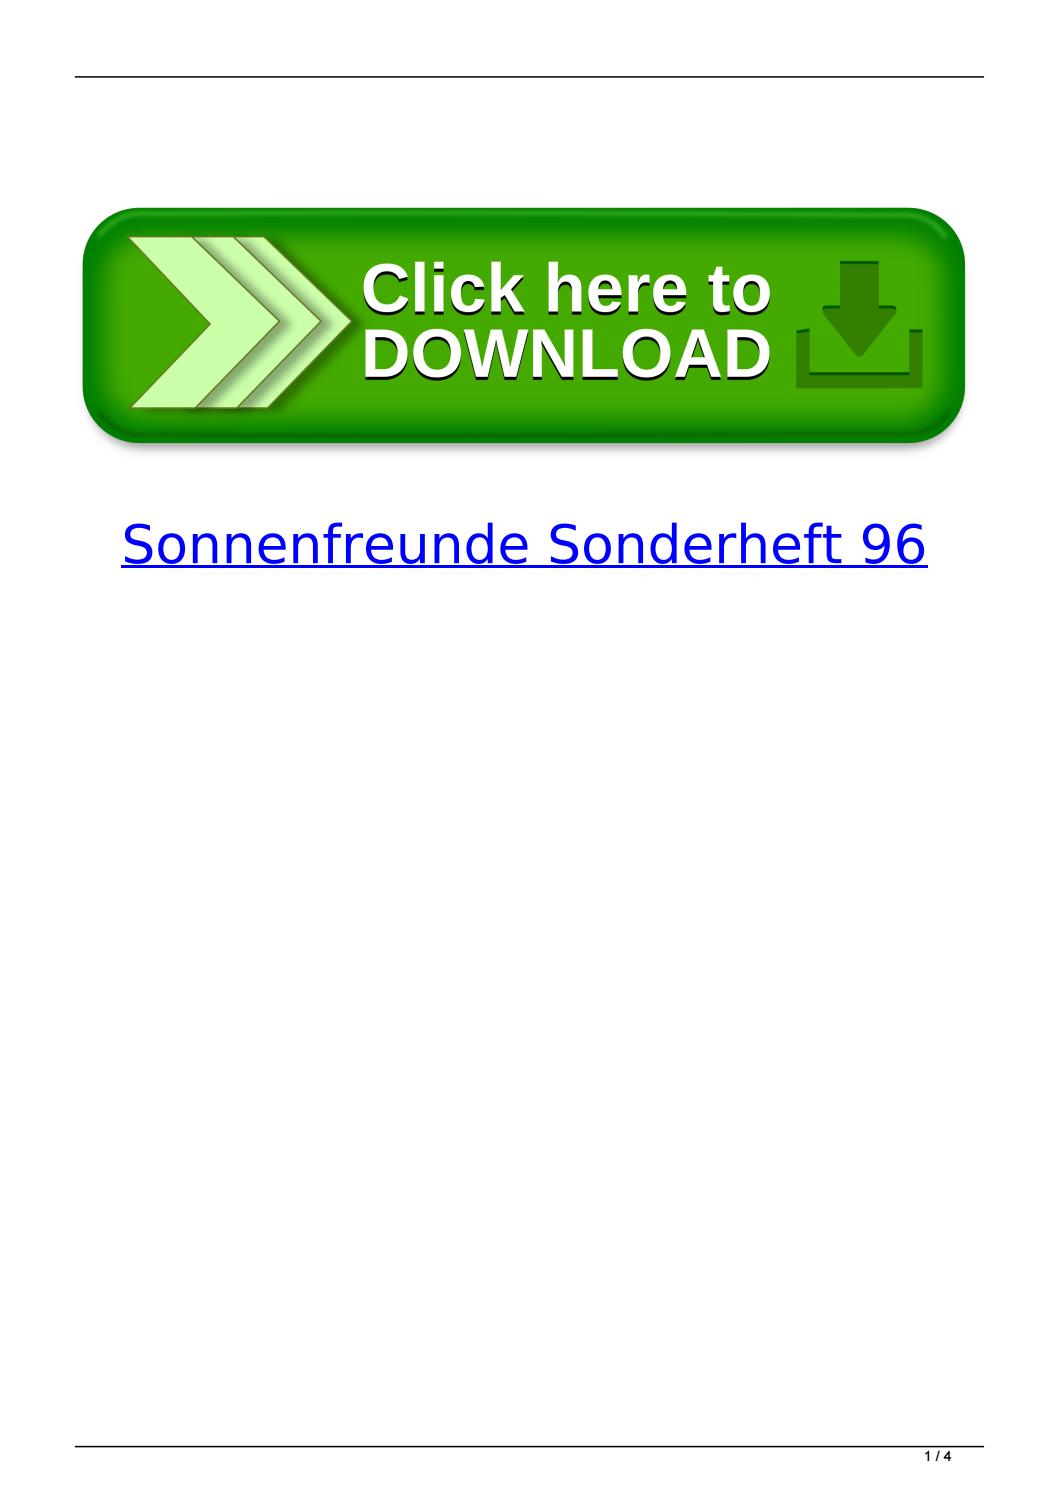 Sonnenfreunde Sonderheft Providerlasopa 16068 Hot Sex Picture